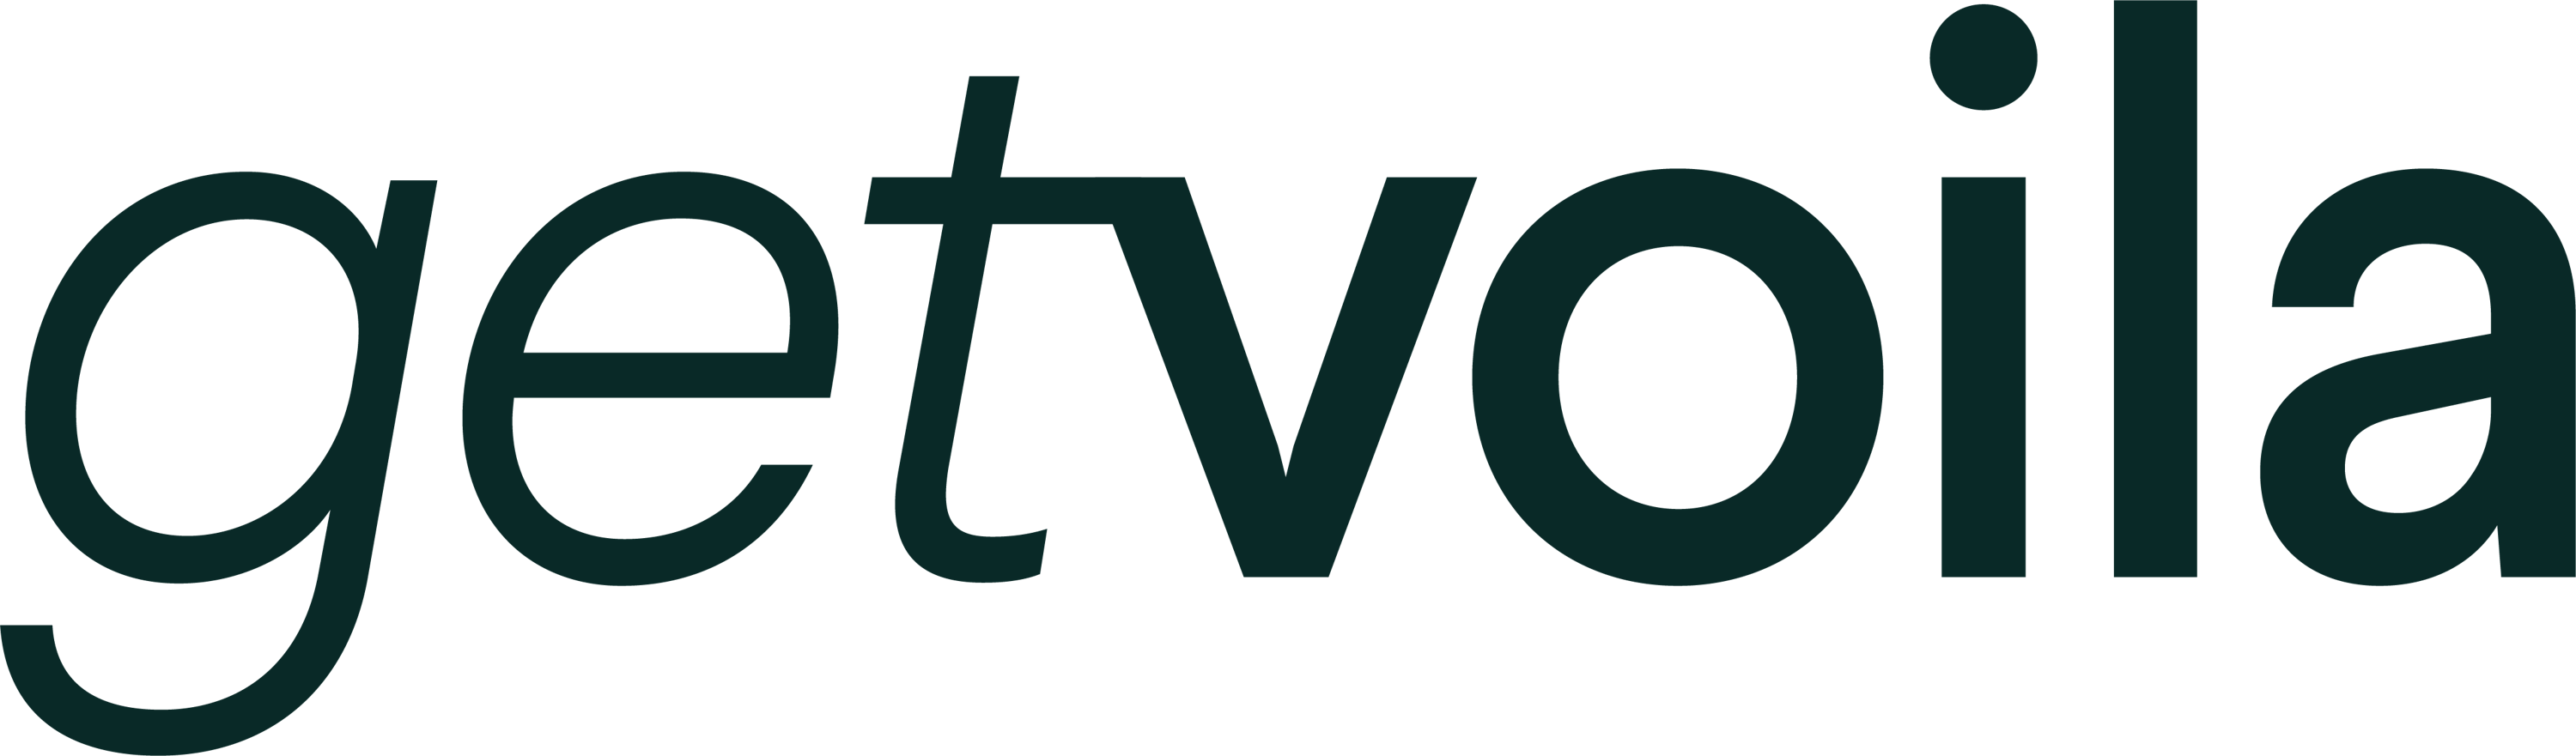 getvoila logo